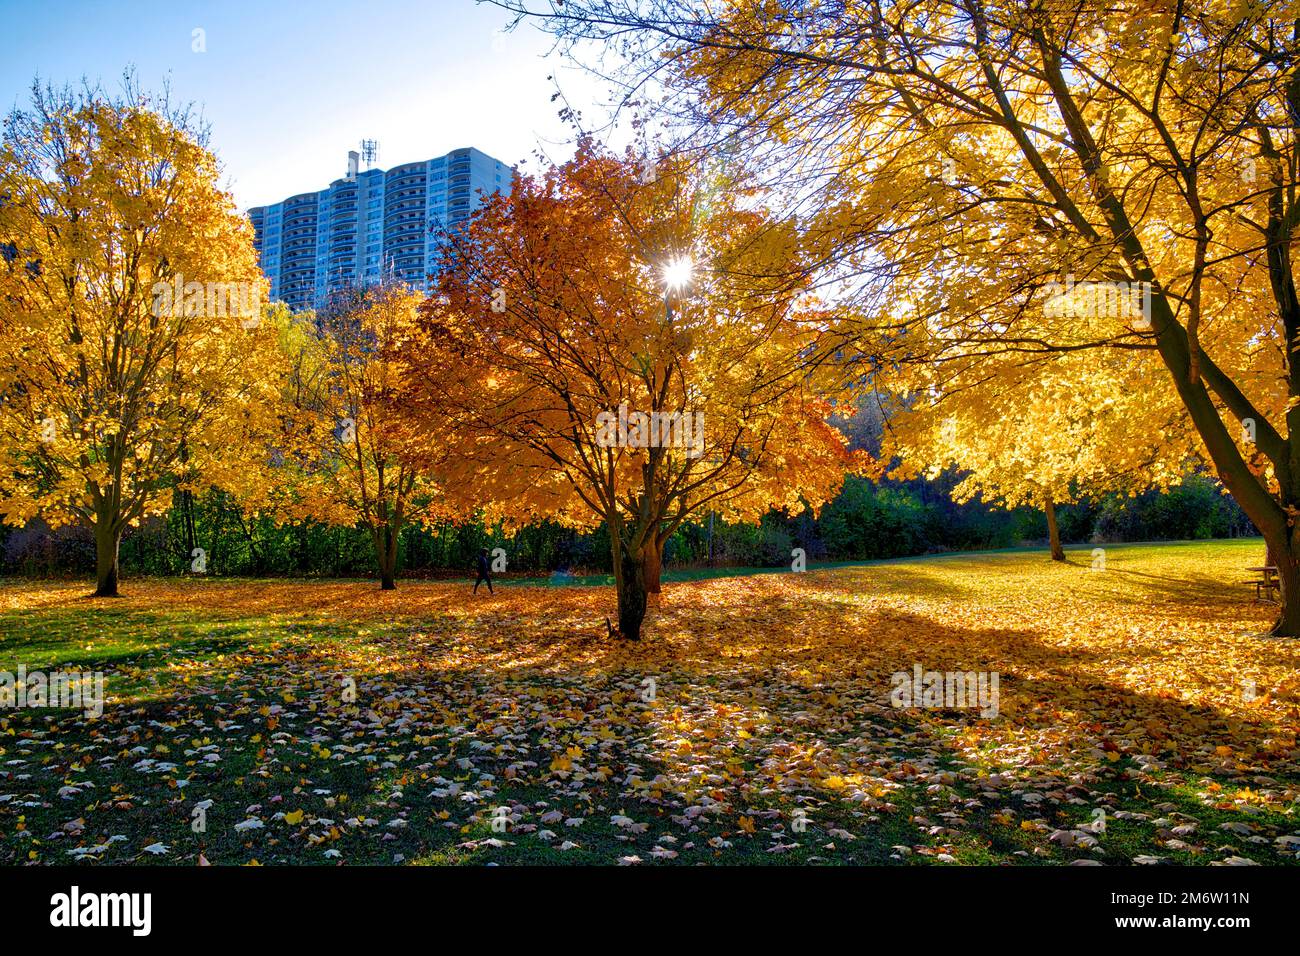 Lifestyle - Apartment Living with autumn leaf colour Stock Photo